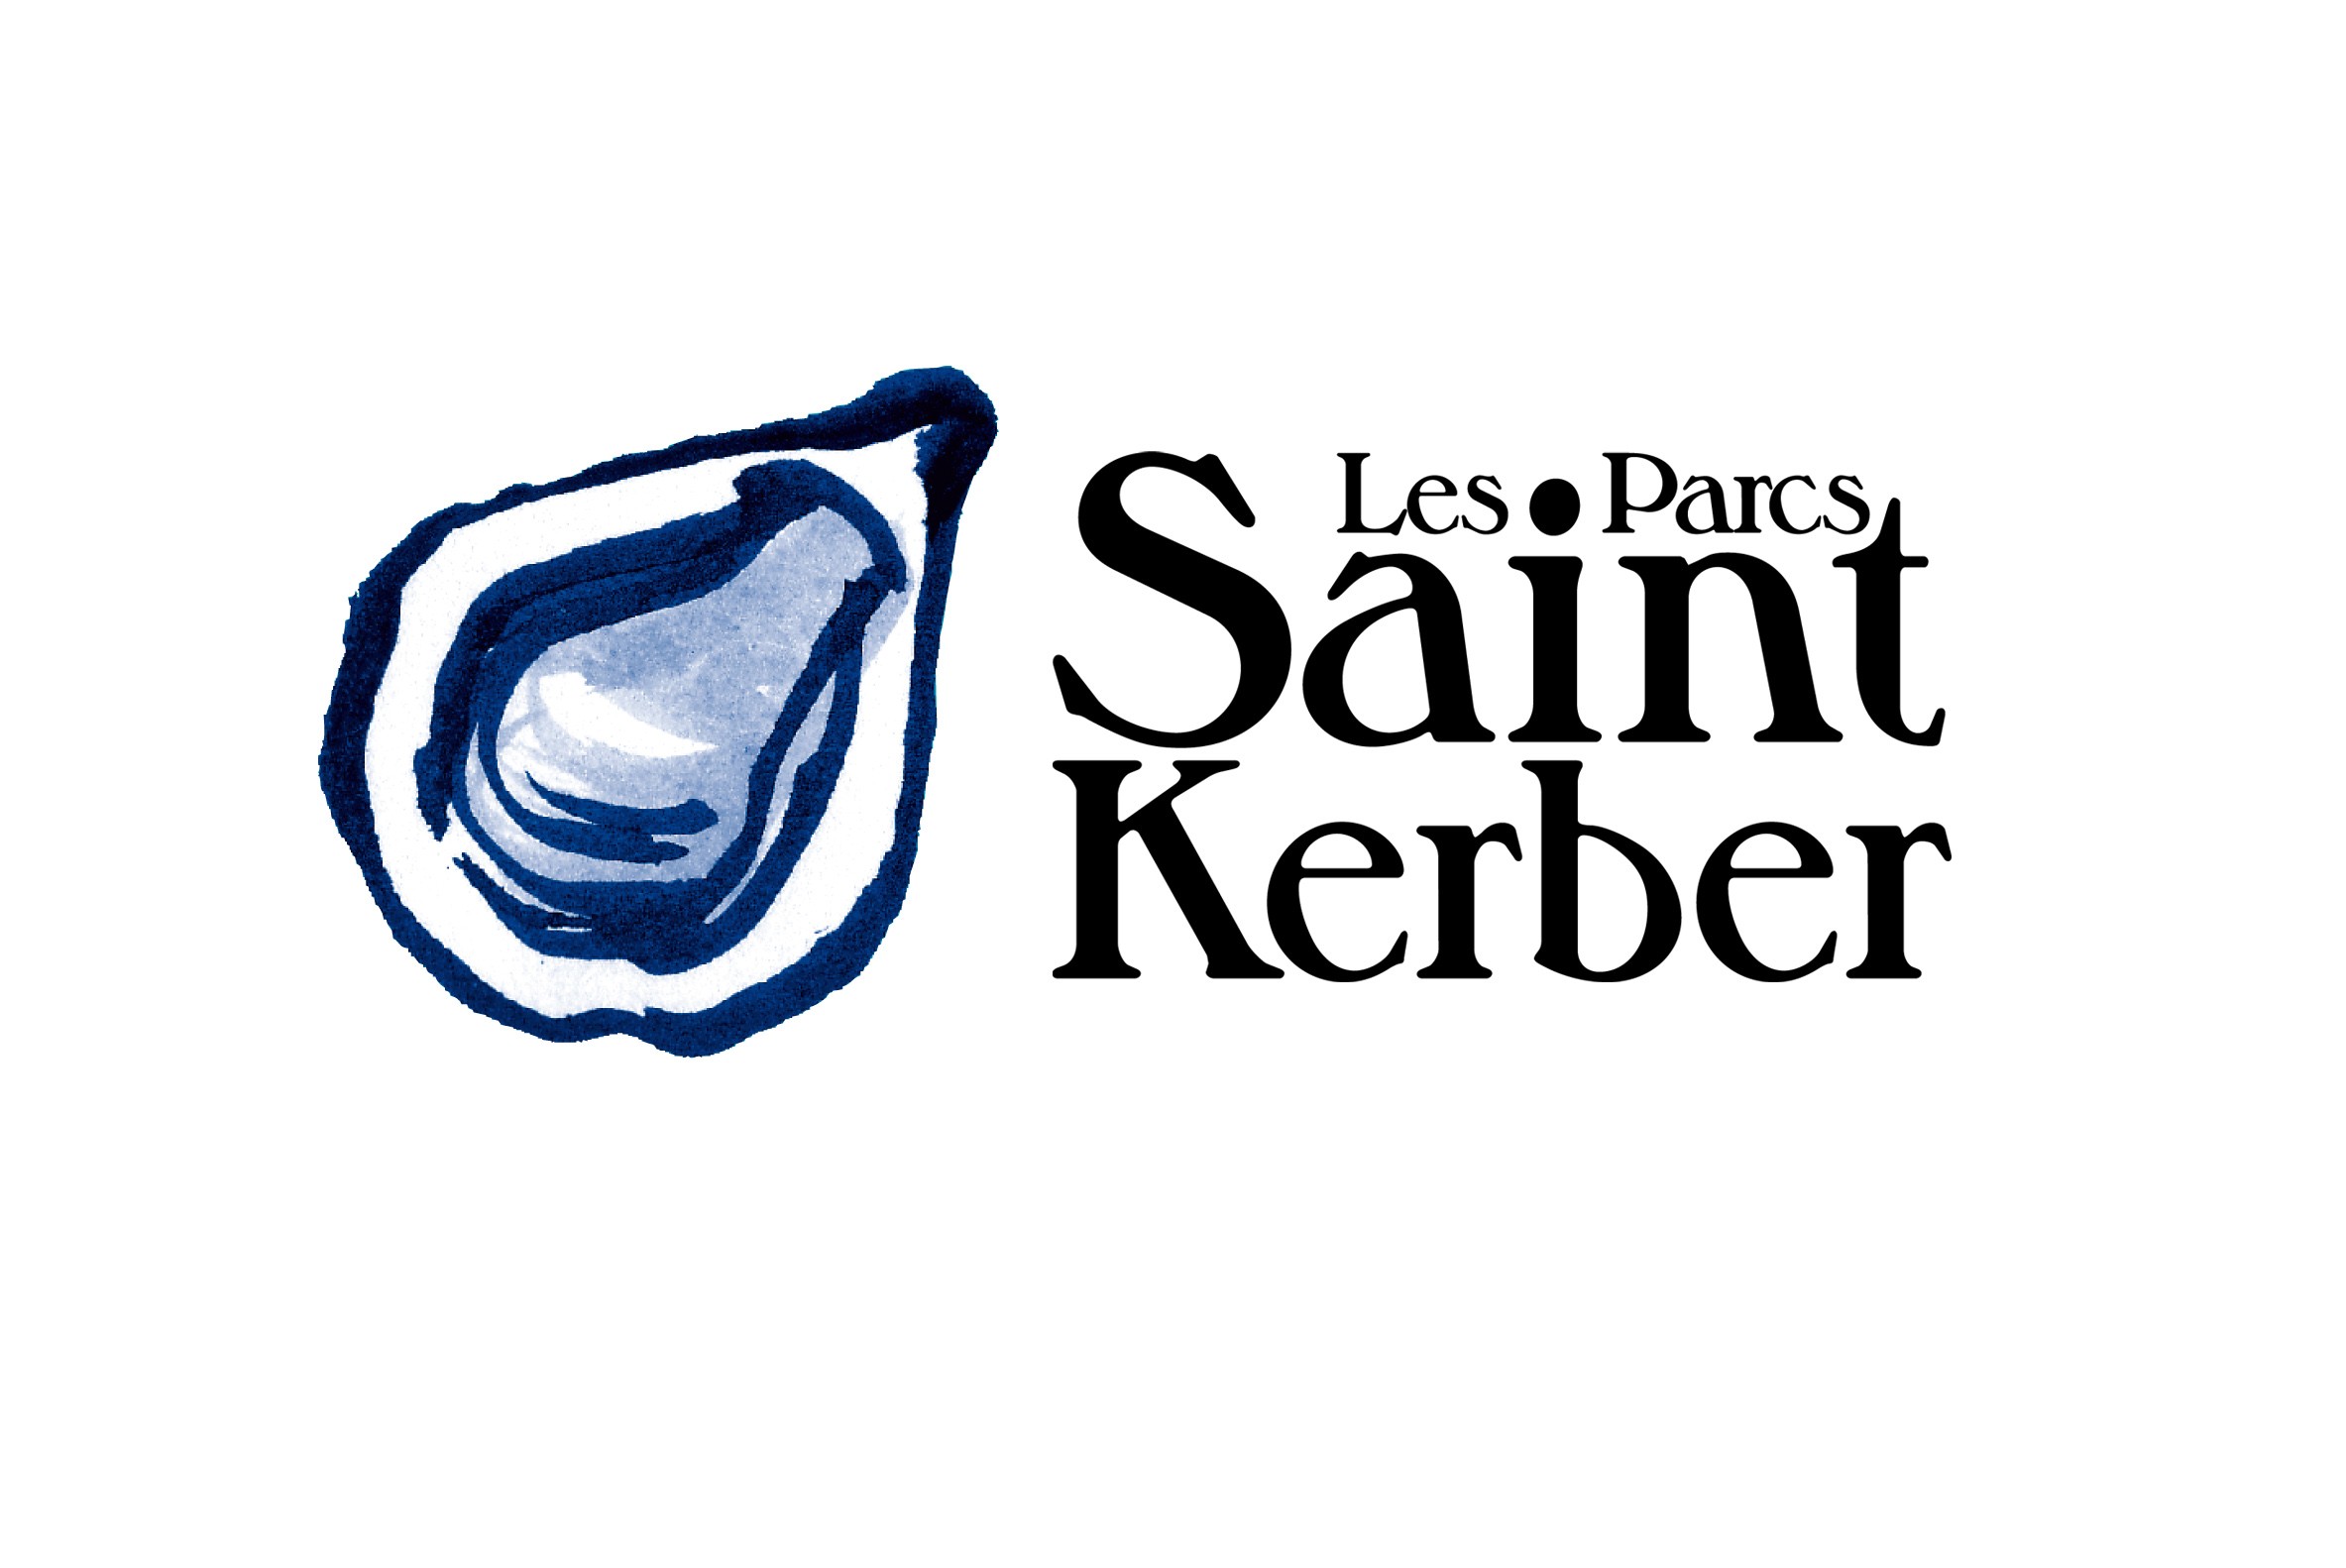 Parcs Saint Kerber